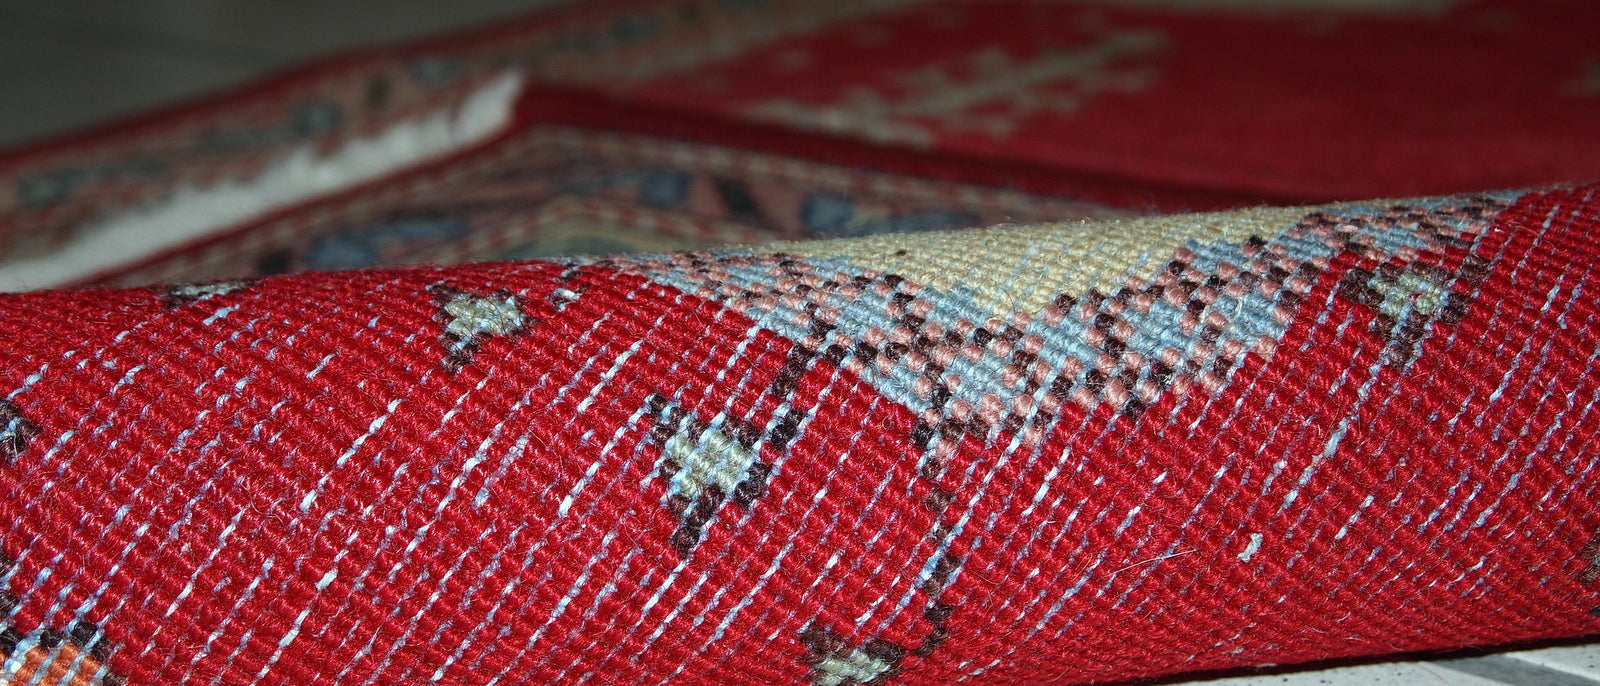 Handmade antique Turkish Konya rug, 1920s